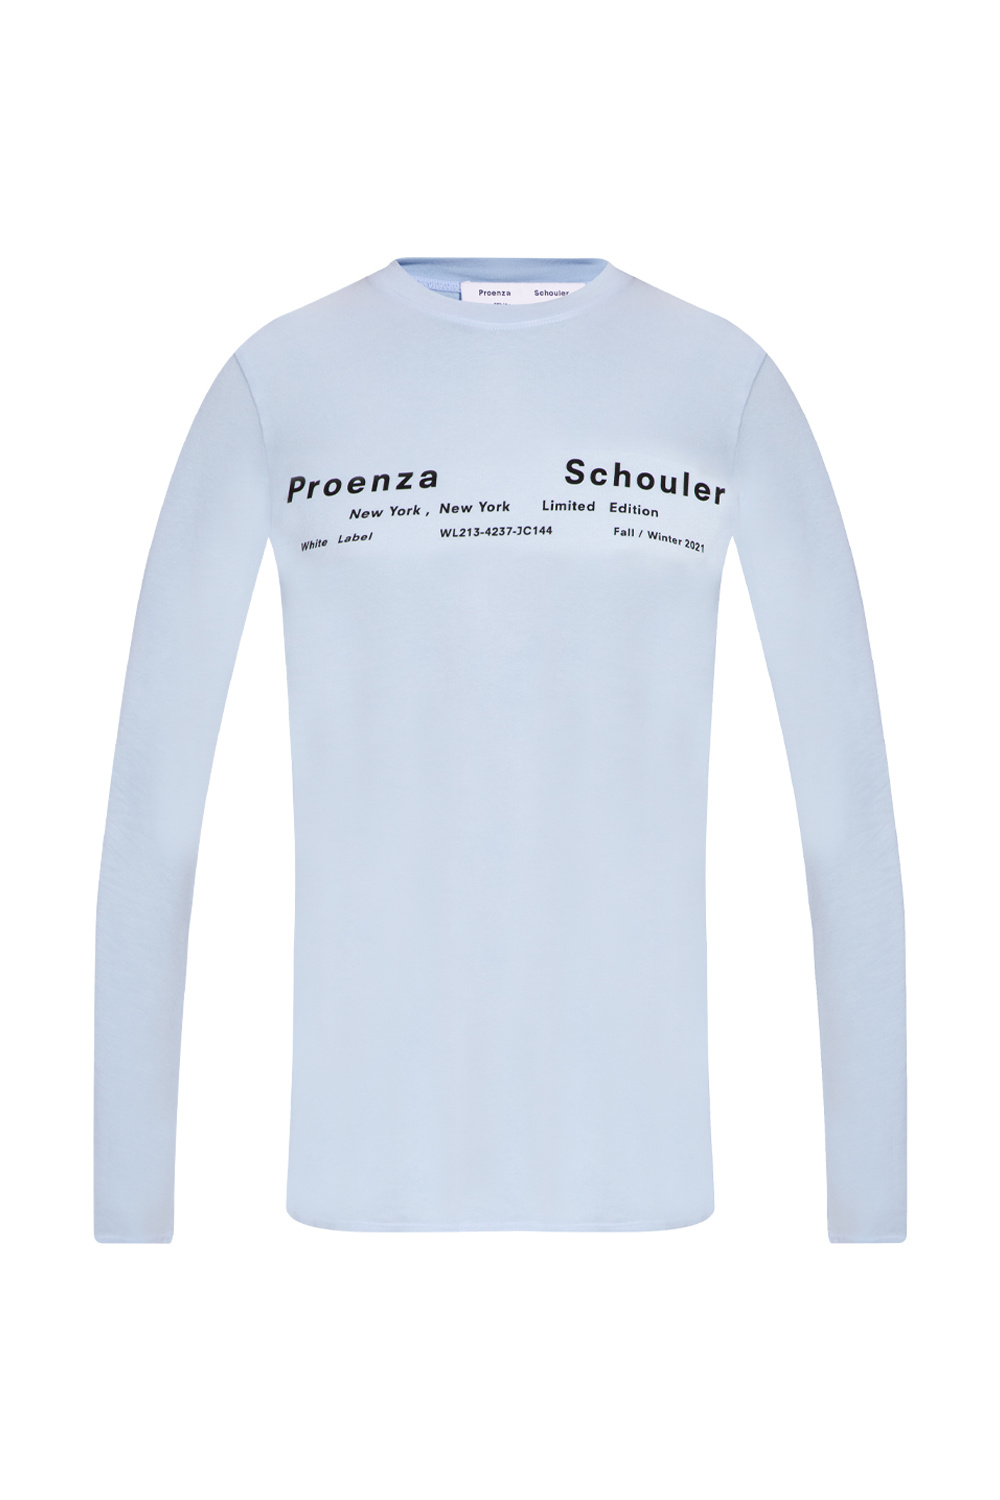 Proenza Schouler White Label drawstring long-sleeve shirt - Black